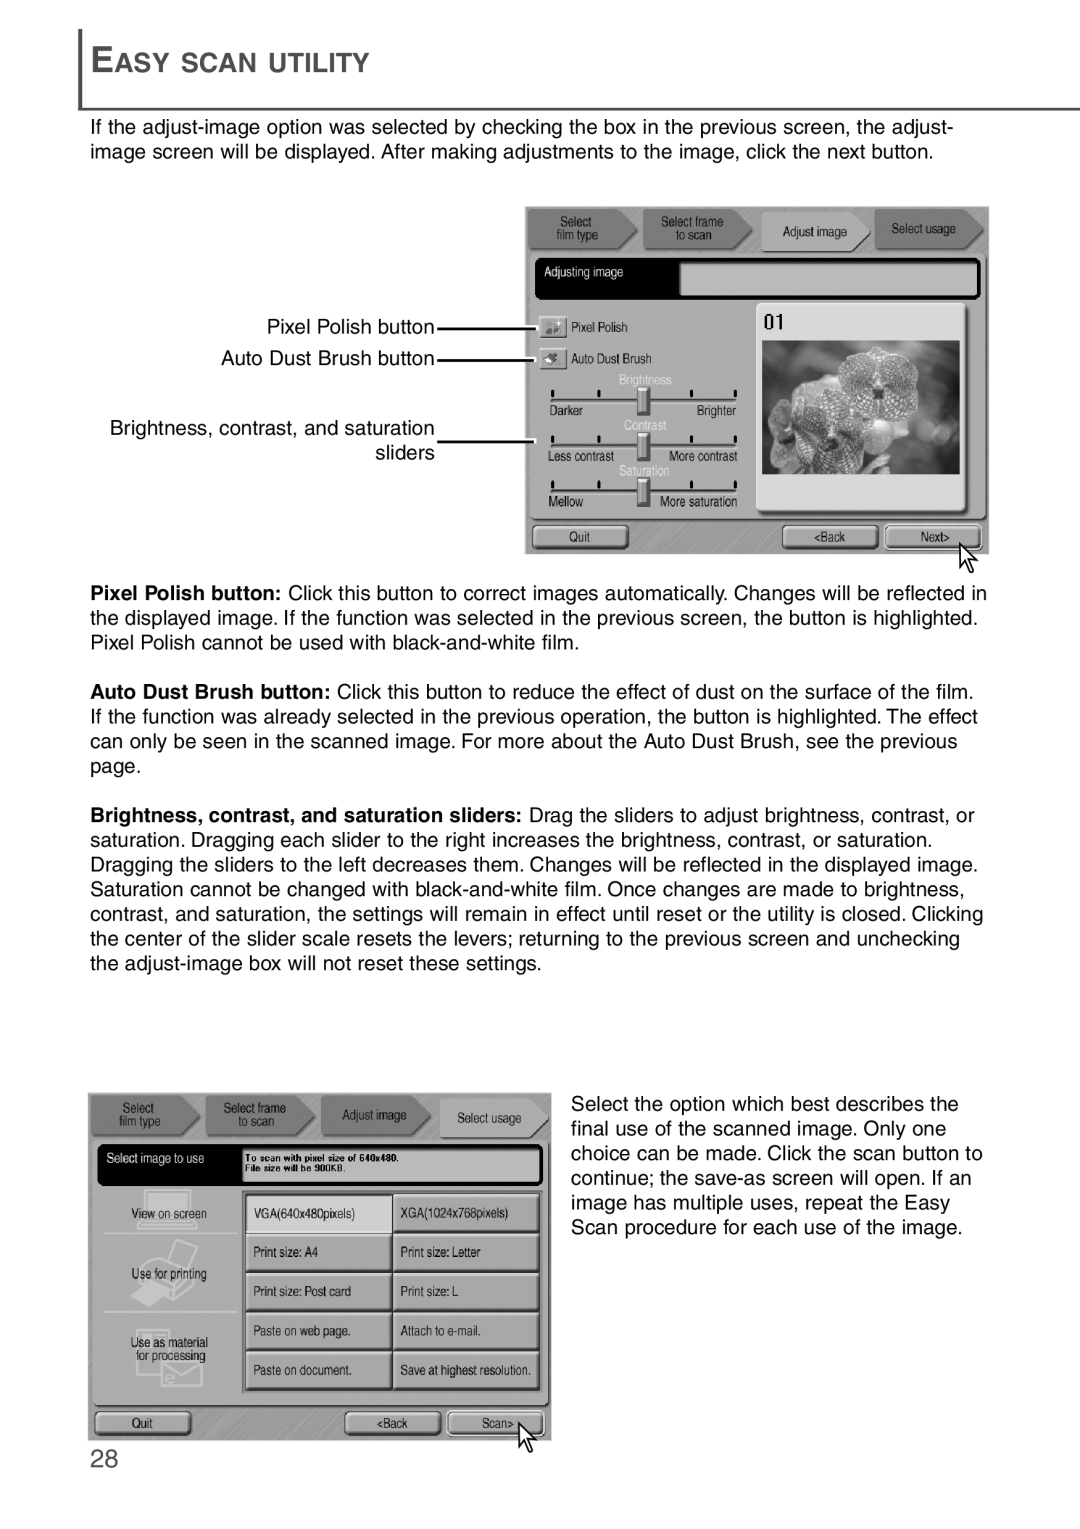 Konica Minolta AF-2840 instruction manual Easy Scan Utility, Pixel Polish button Auto Dust Brush button 